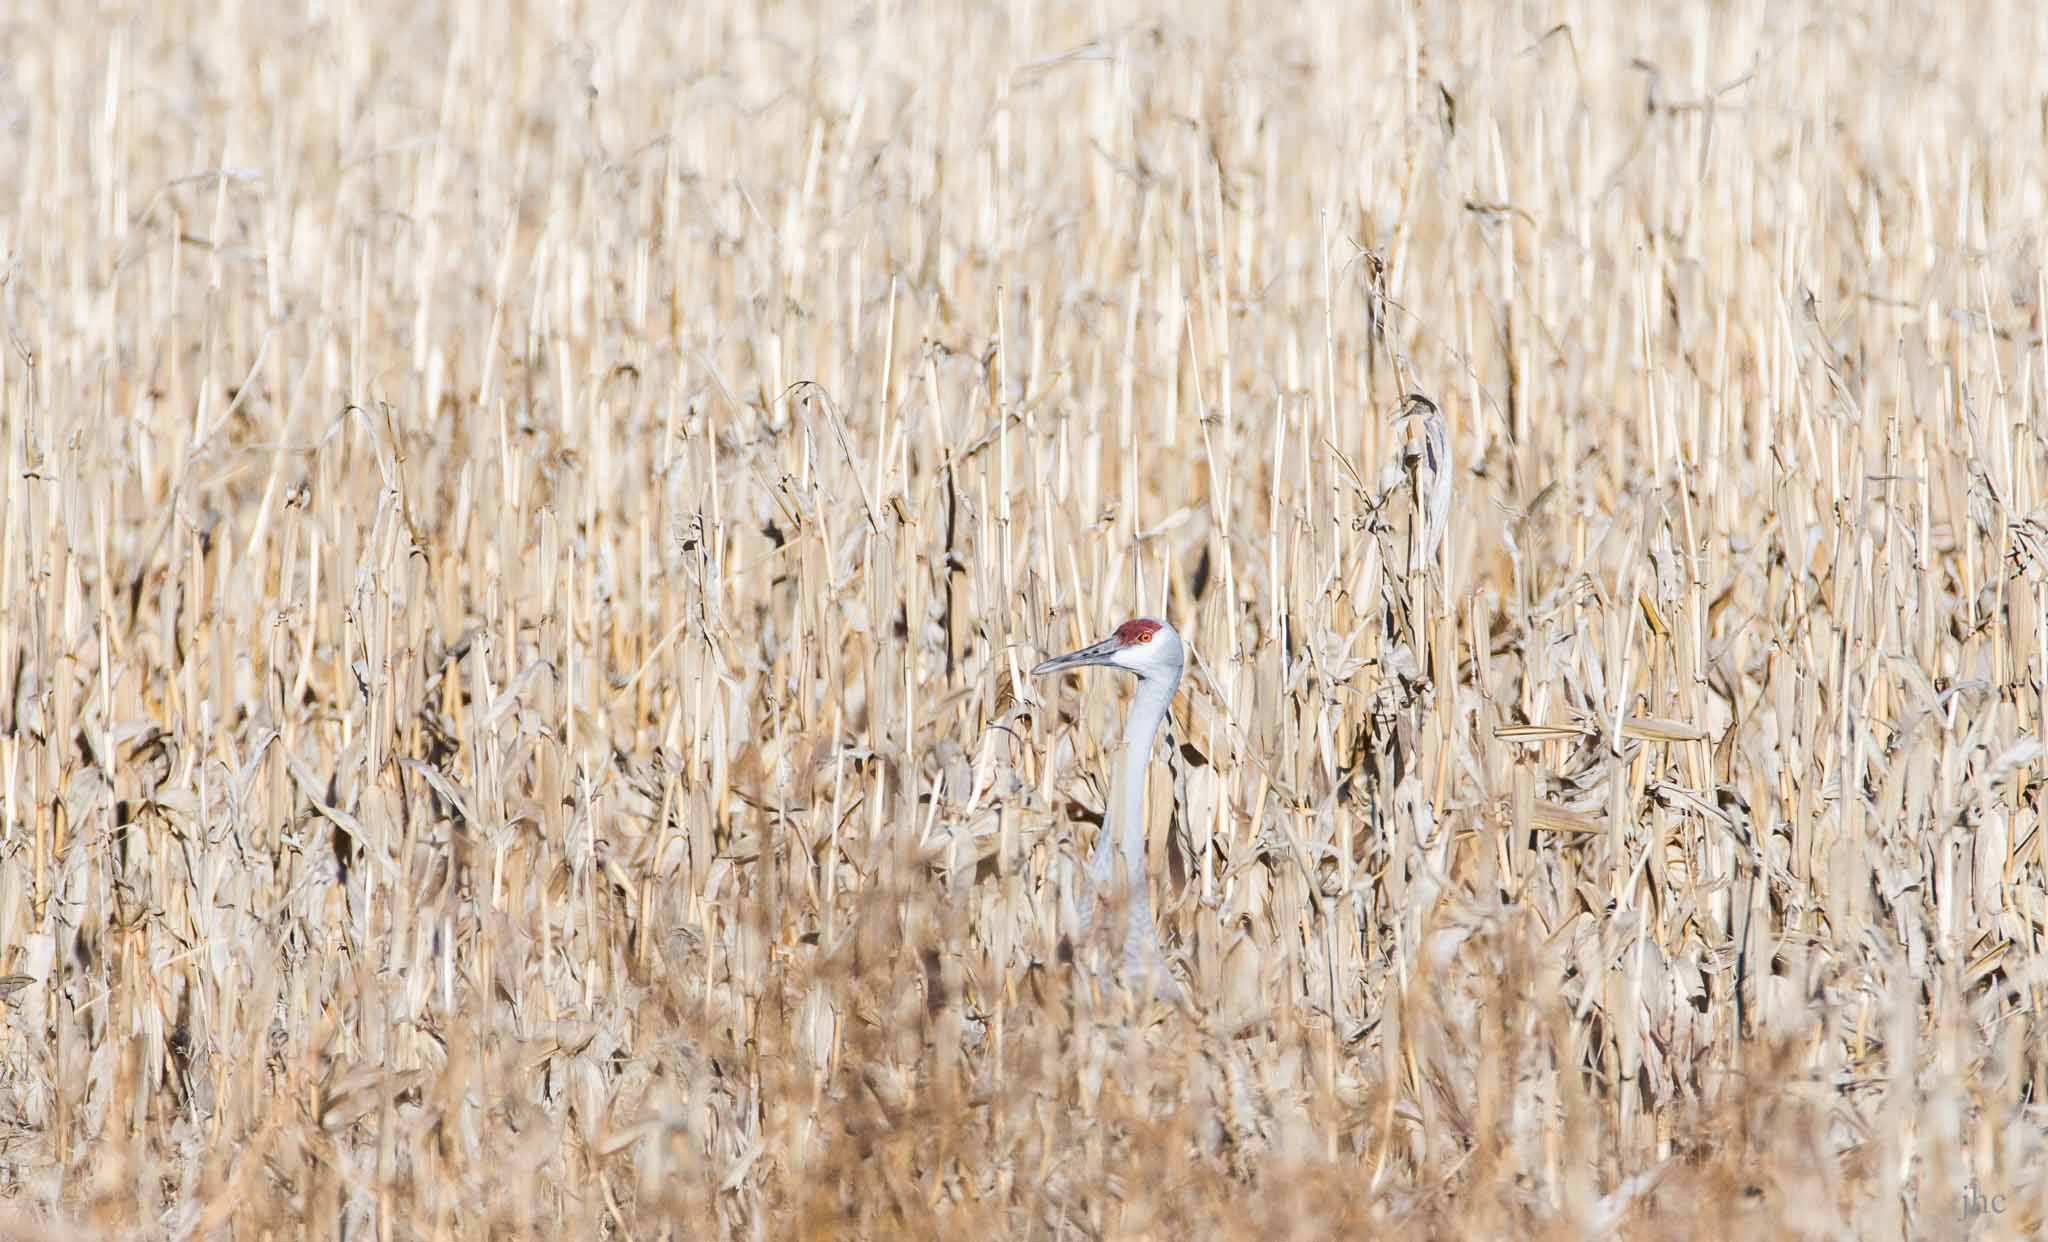 Sandhill Crane in a corn field, Ladd S. Gordon Wildlife Management Area, Bernardo NM, January 11, 2014